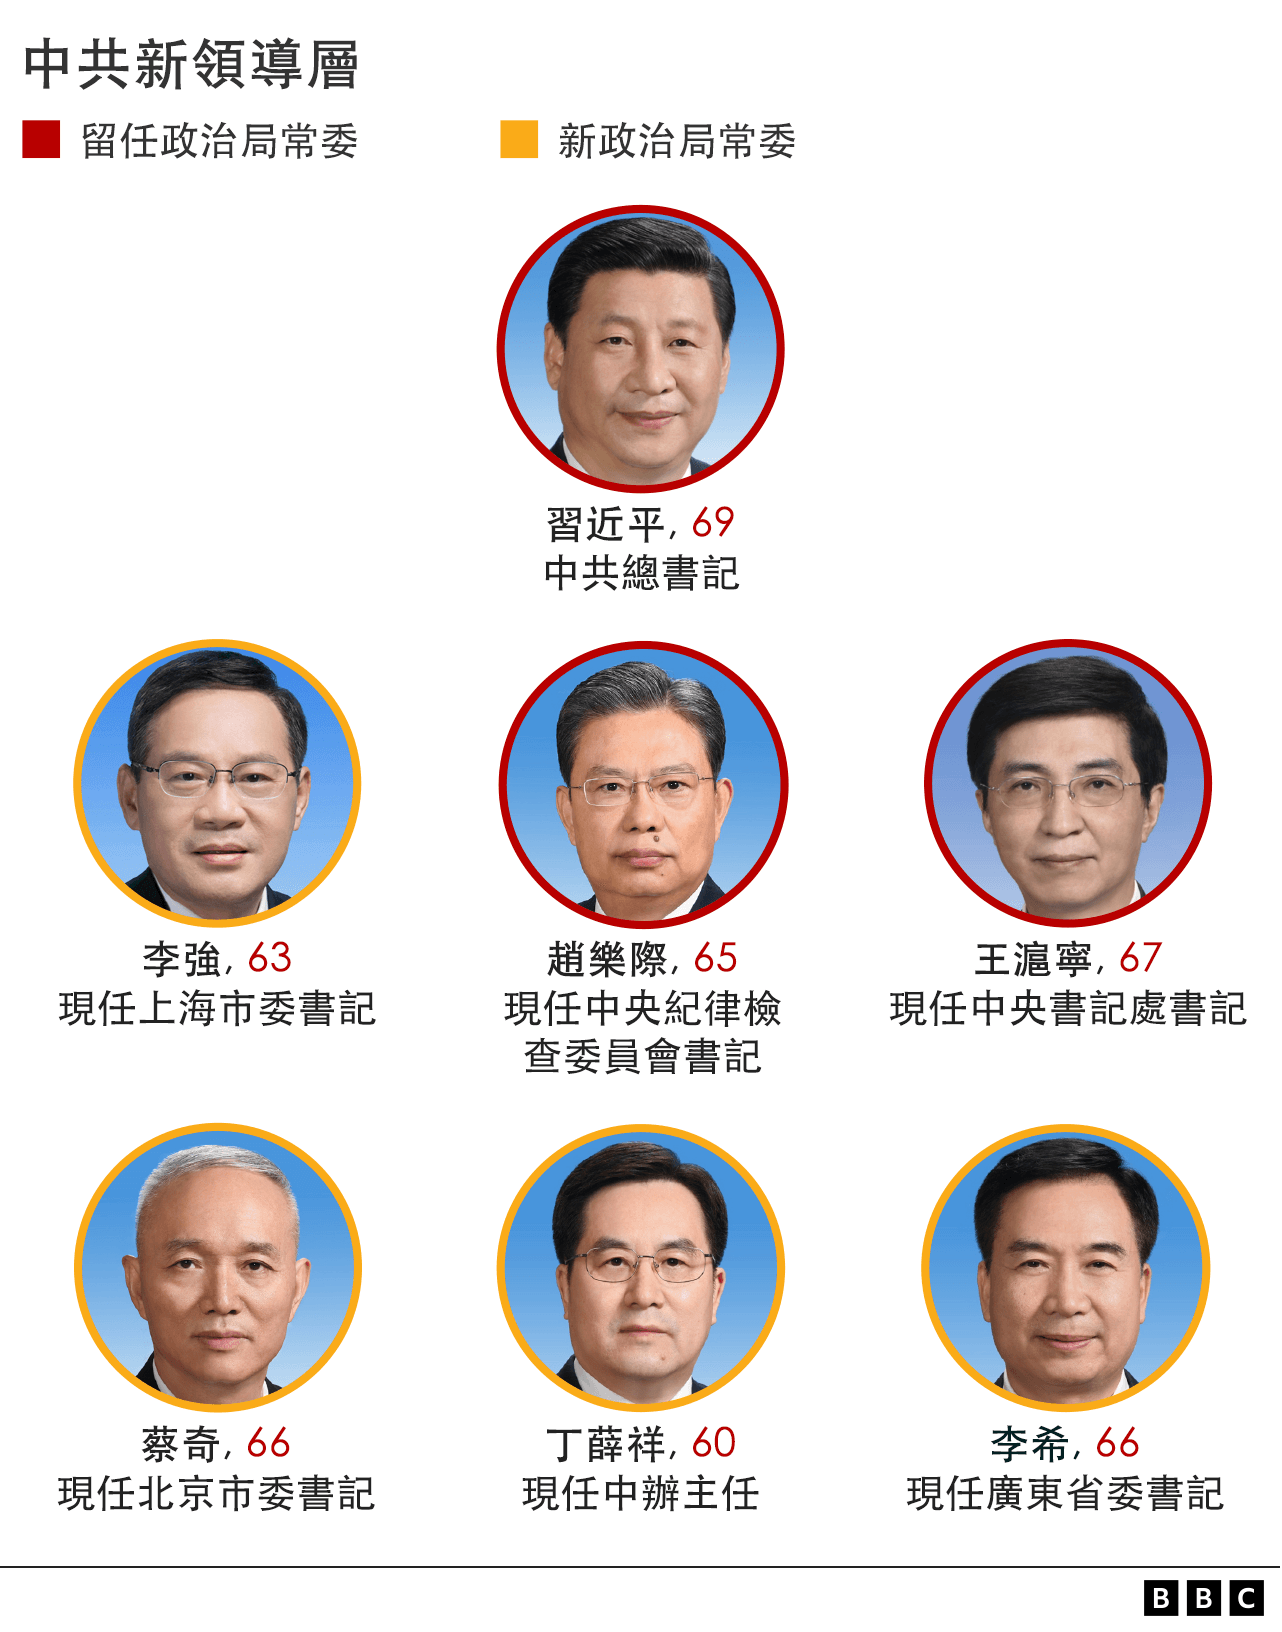 Politburo Standing Committee List